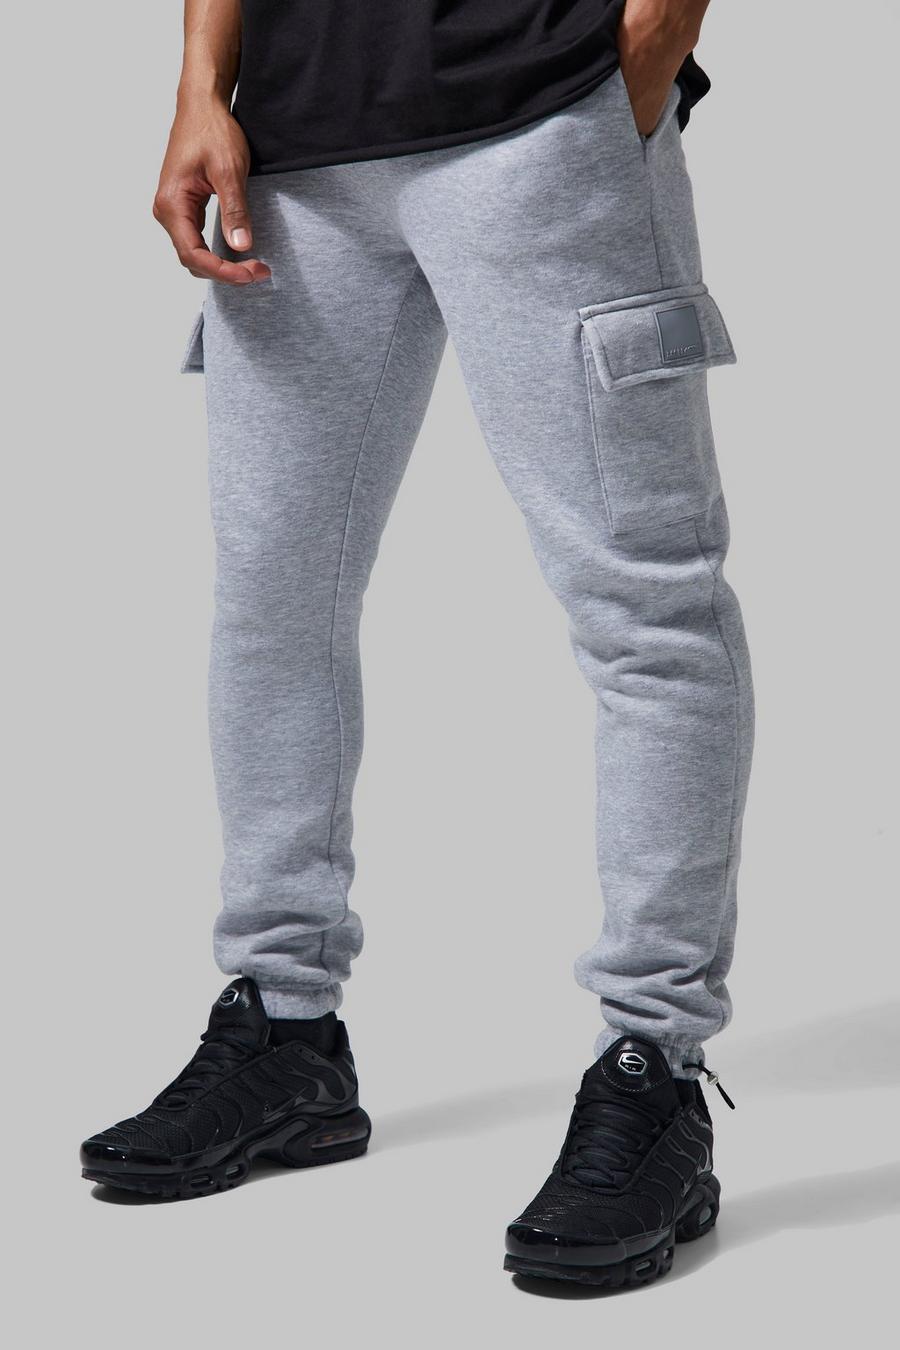 Pantaloni tuta Cargo Man Active Gym con polsini alle caviglie e fermacorde, Grey marl grigio